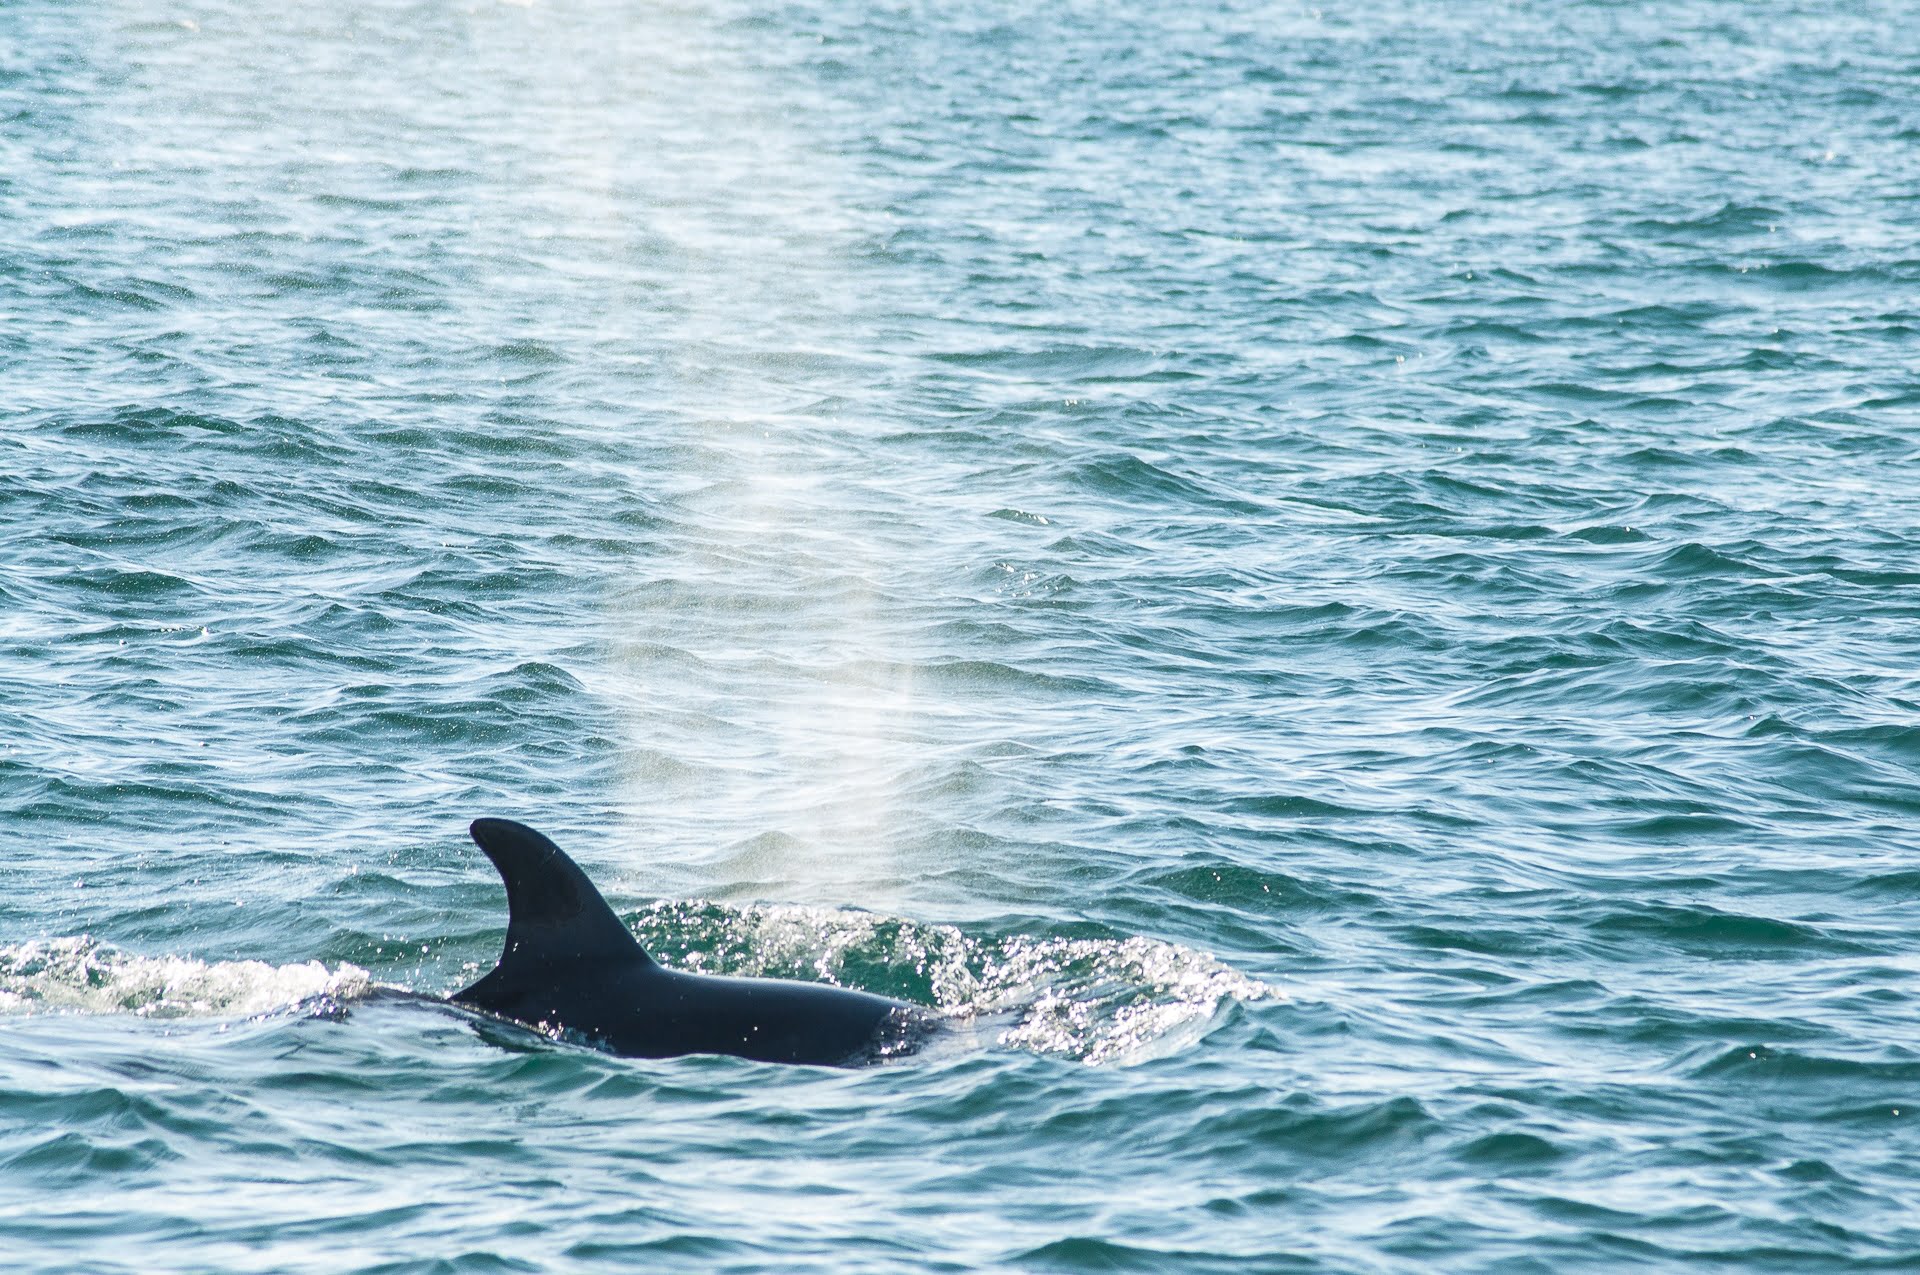 Setubal dauphin un aileron - Les globe blogueurs - blog voyage nature